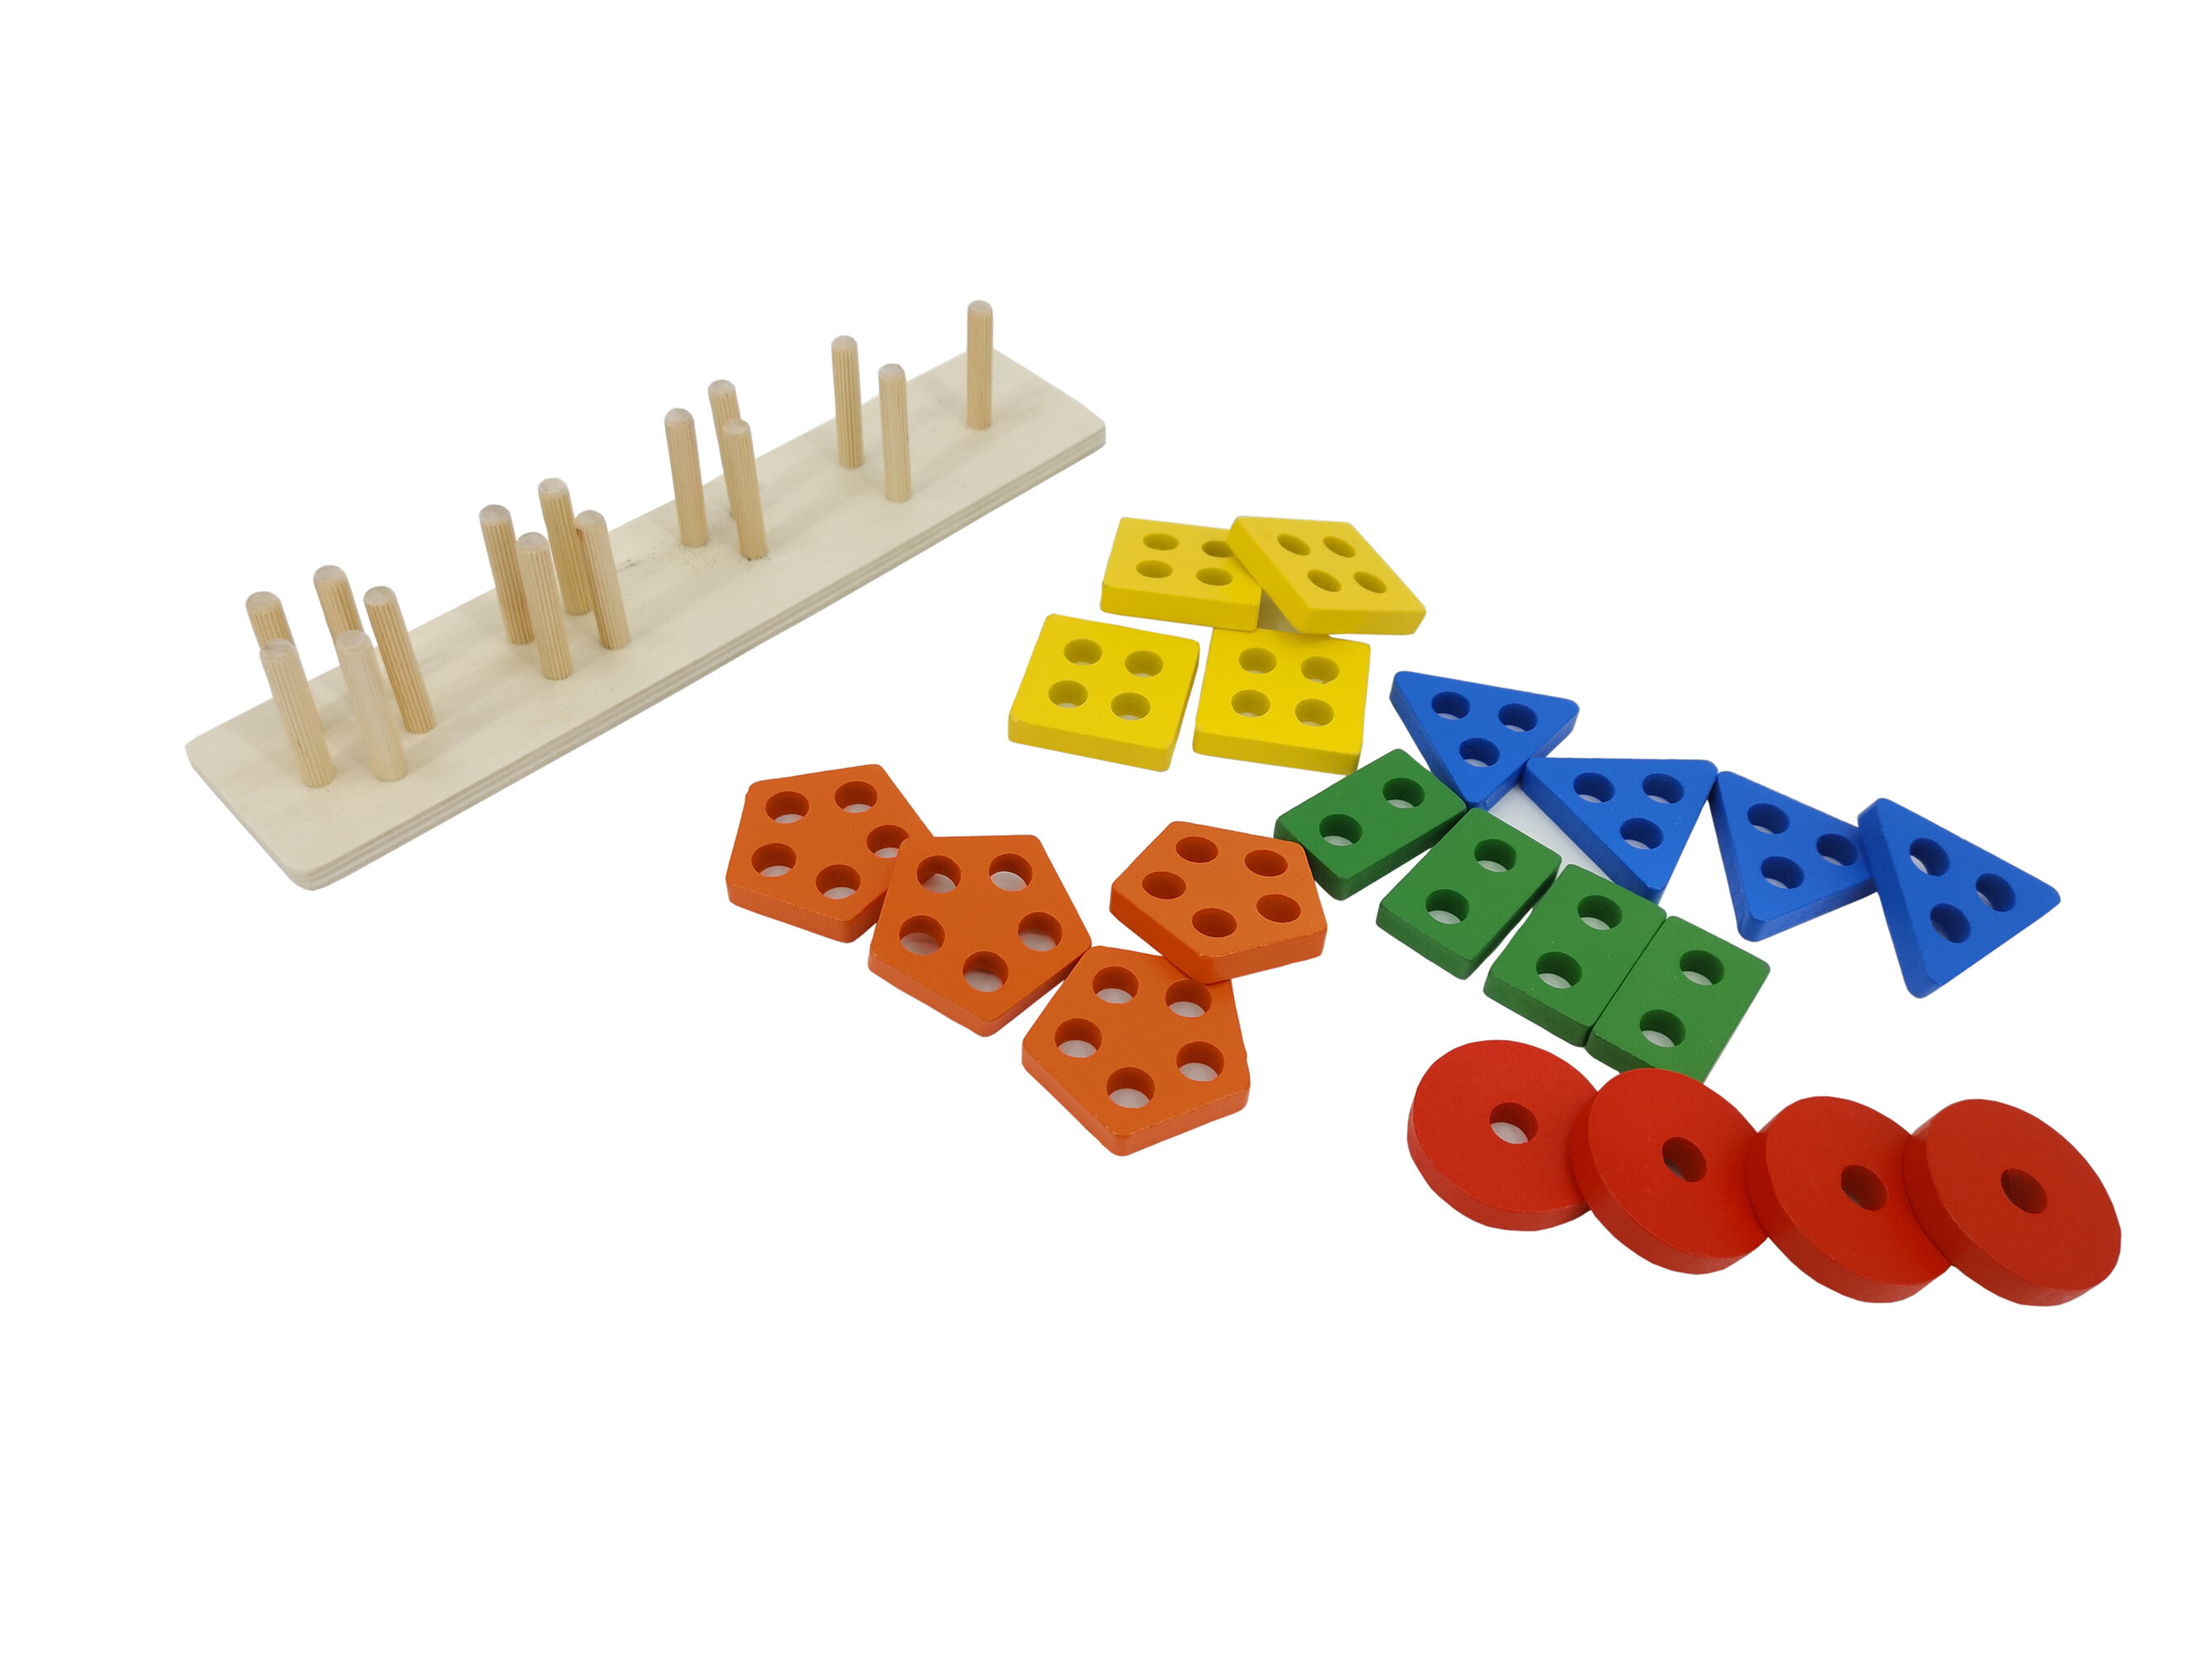 Kids Wooden Colour Blocks Shape Sorter Puzzle Cube Box Preschool Toddler Sorting